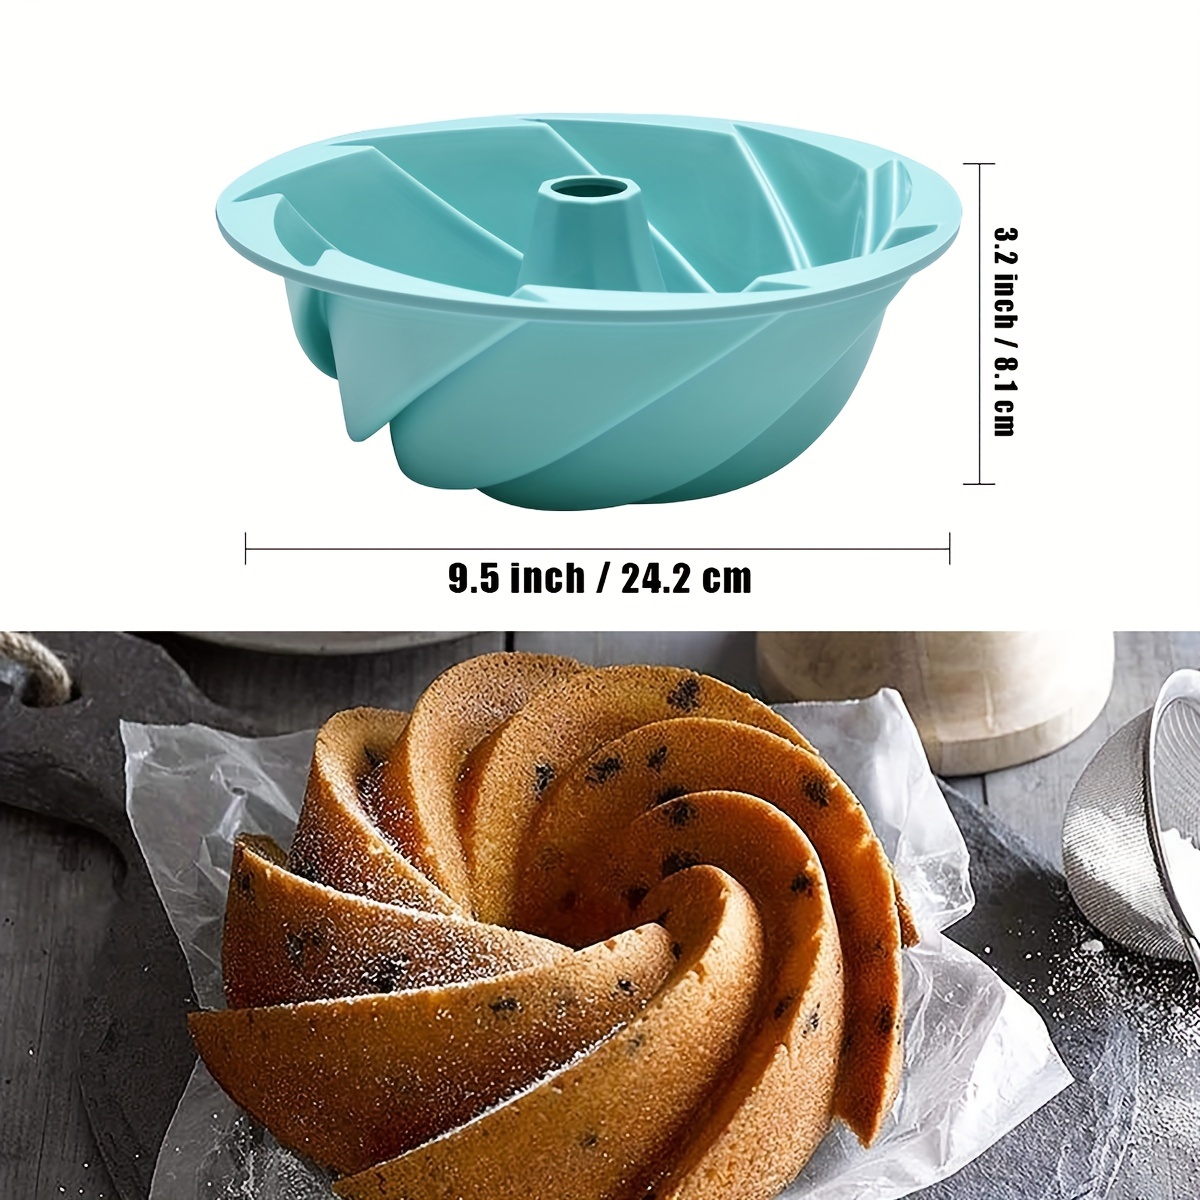 Bobasndm Silicone Cake Pan 10 Inch- Non-stick Fluted Cake Pan with Handle,  Tube Cake Pan Silicone Baking Molds for Jello, Gelatin, Pound Cake